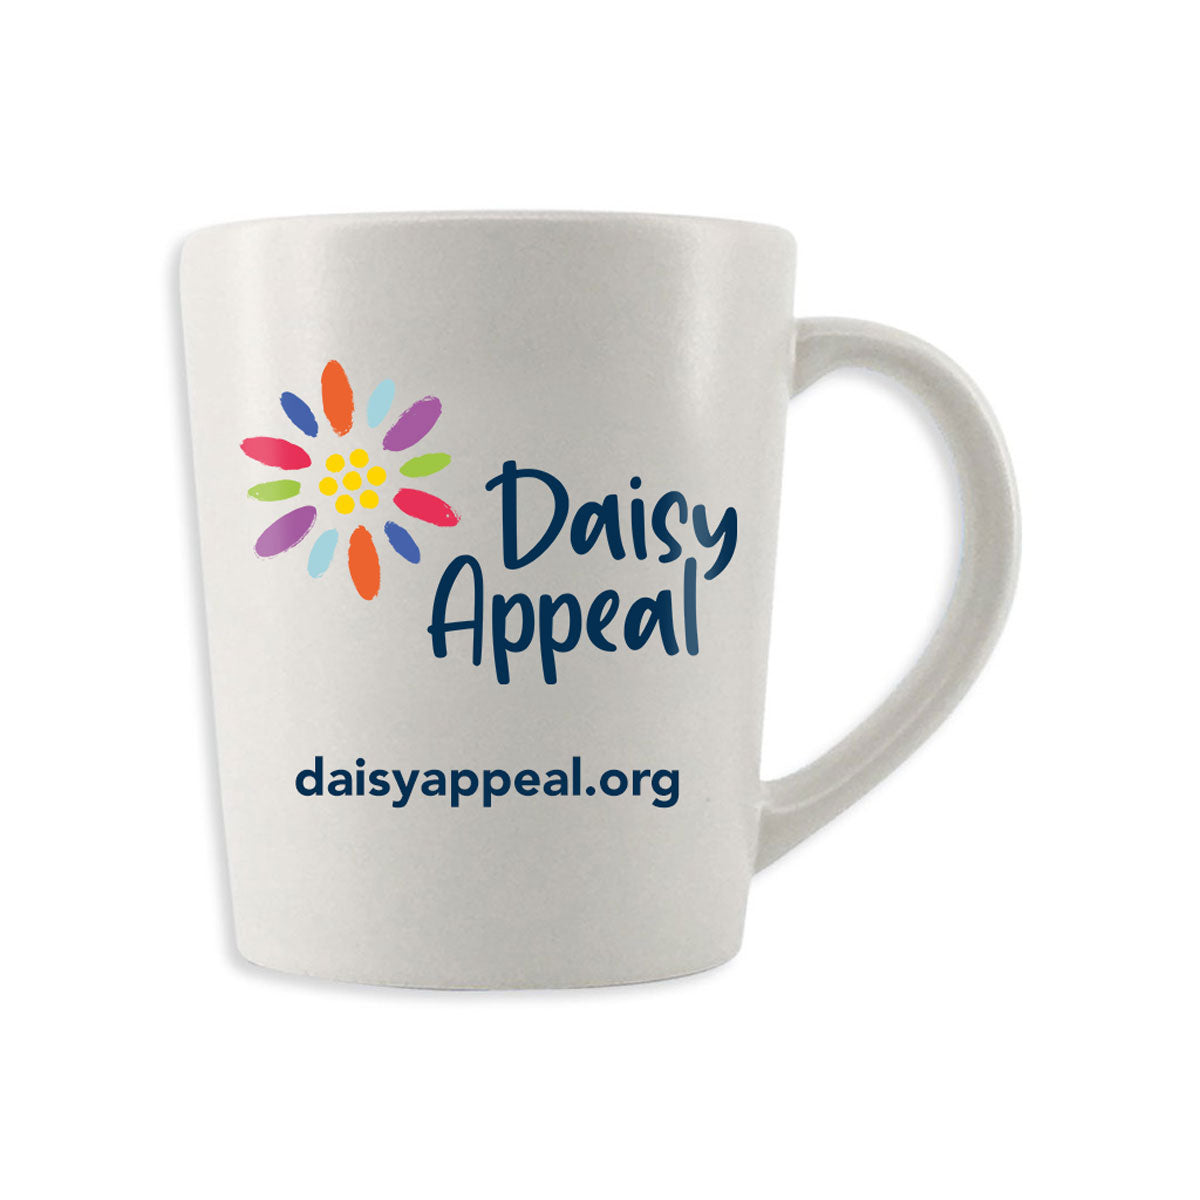 Daisy Appeal Charity Mug